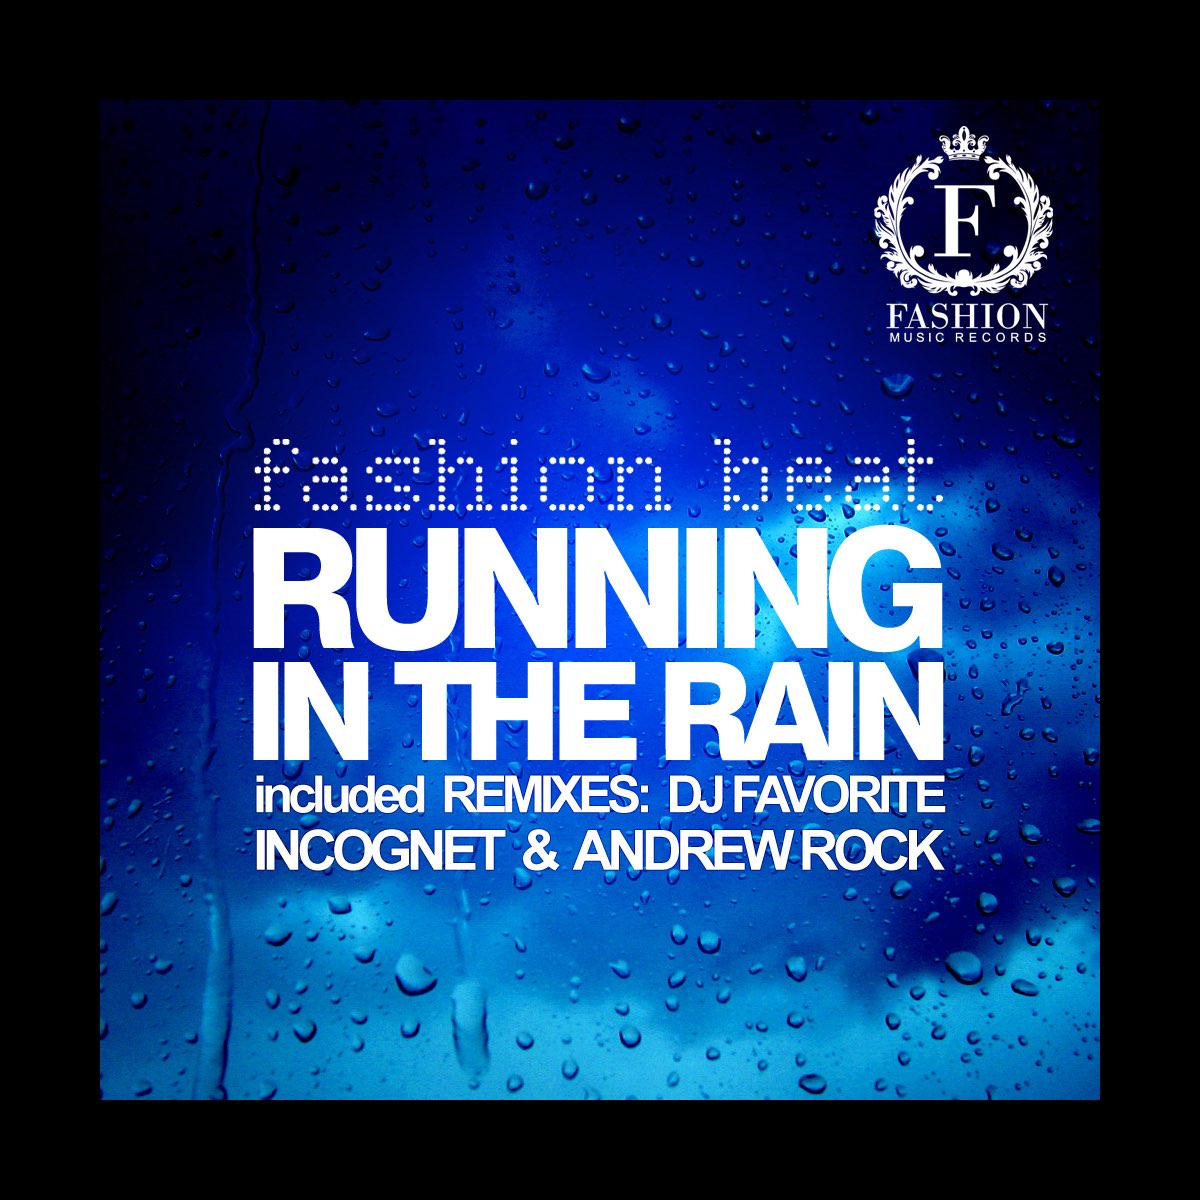 Rain ремикс. Fashion Beat. DJ Incognet Fashion Music records. The Rain Remix. Beatnik Fashion.